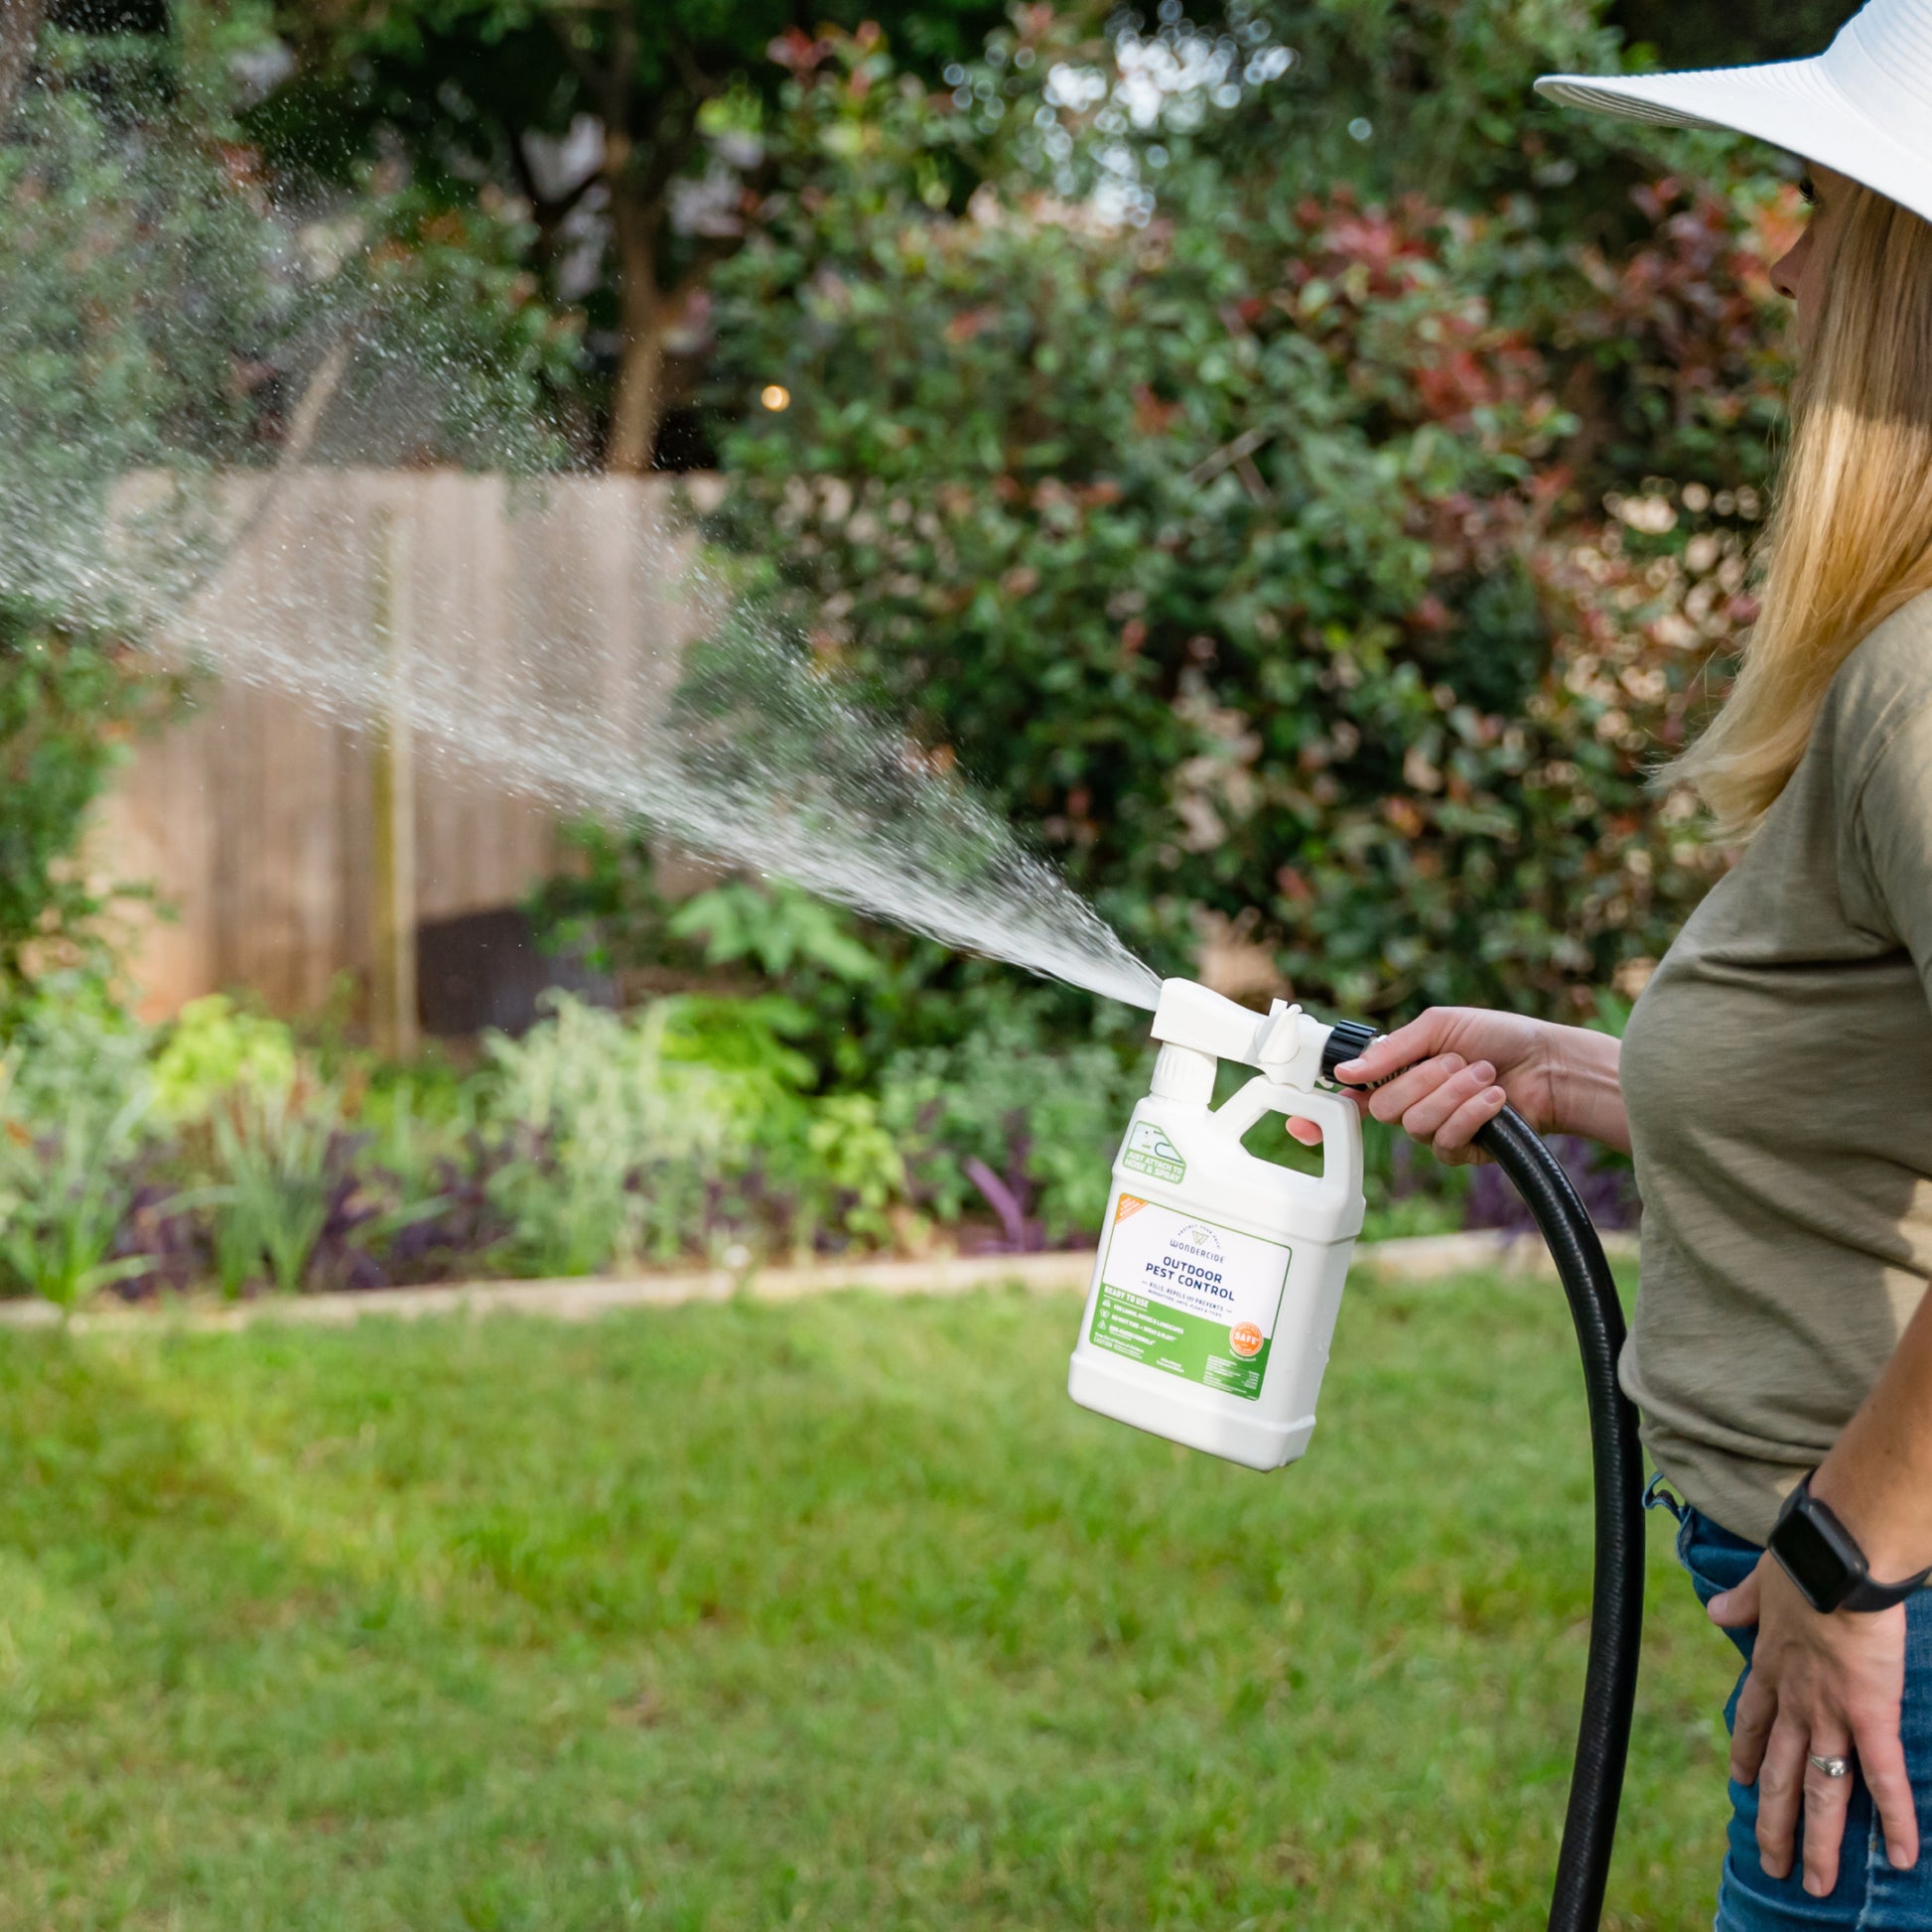 Hose Sprayer Attachment with Bottle - for Spraying Fertilizer, Soap,  Pesticide